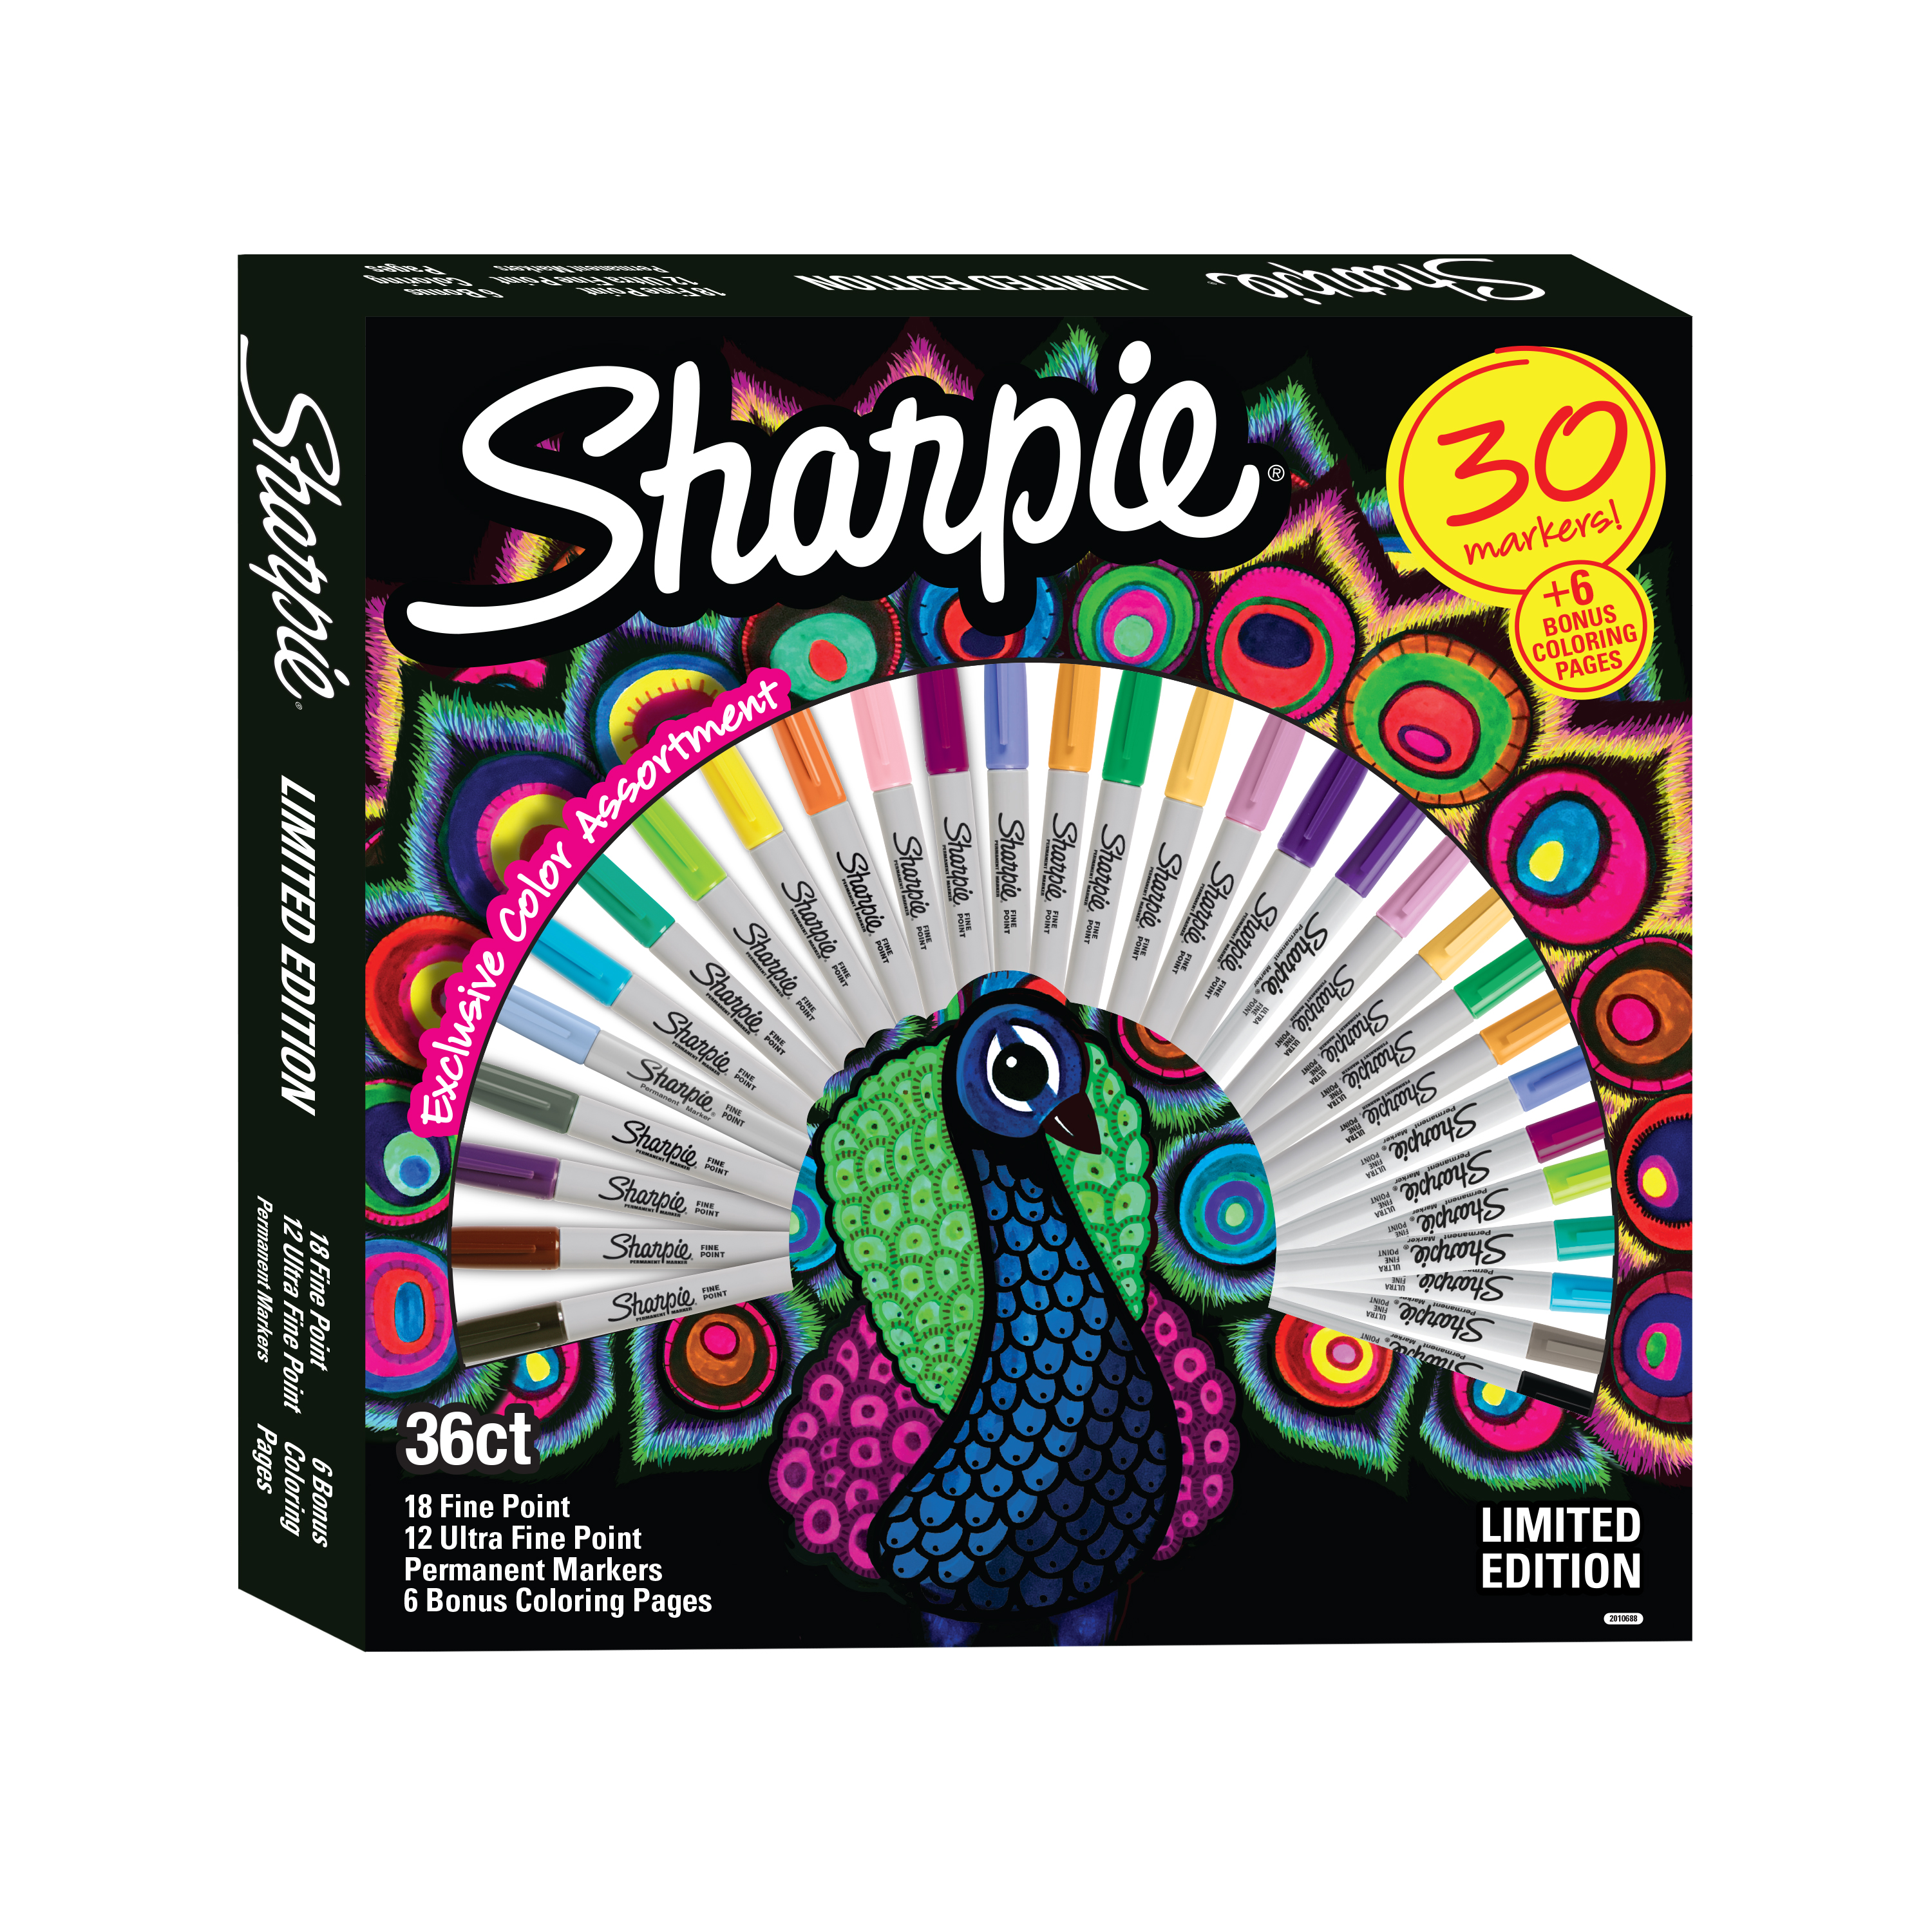 Sharpie Permanent Marker Limited Edition Set, Exclusive Color Assortment, plus 6 Bonus Coloring Sheets, 36 Count - image 1 of 9